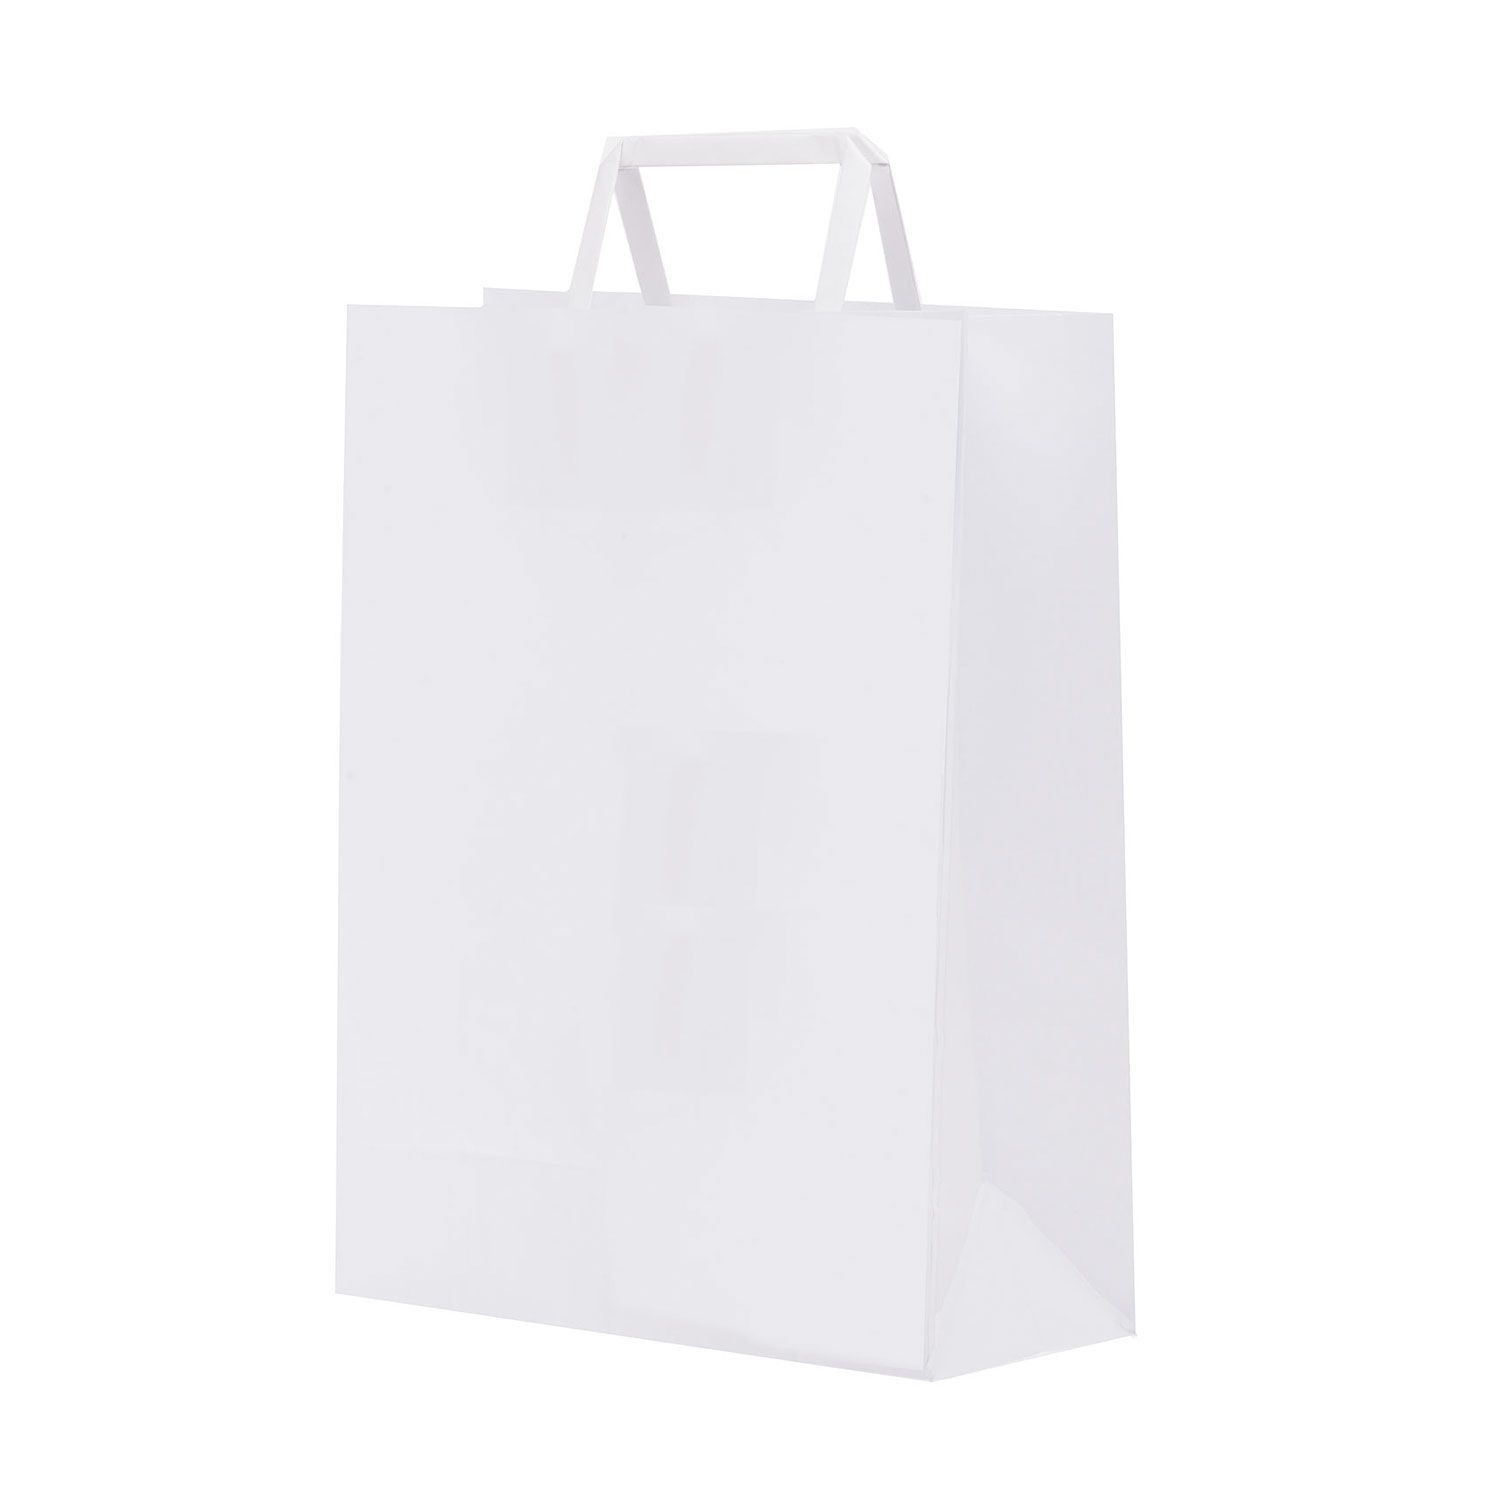 Shopper carta kraft bianco neutro manico piattina in carta 22+10x29 cm gr.  80, Shopping Bag Busta di Carta Bianco